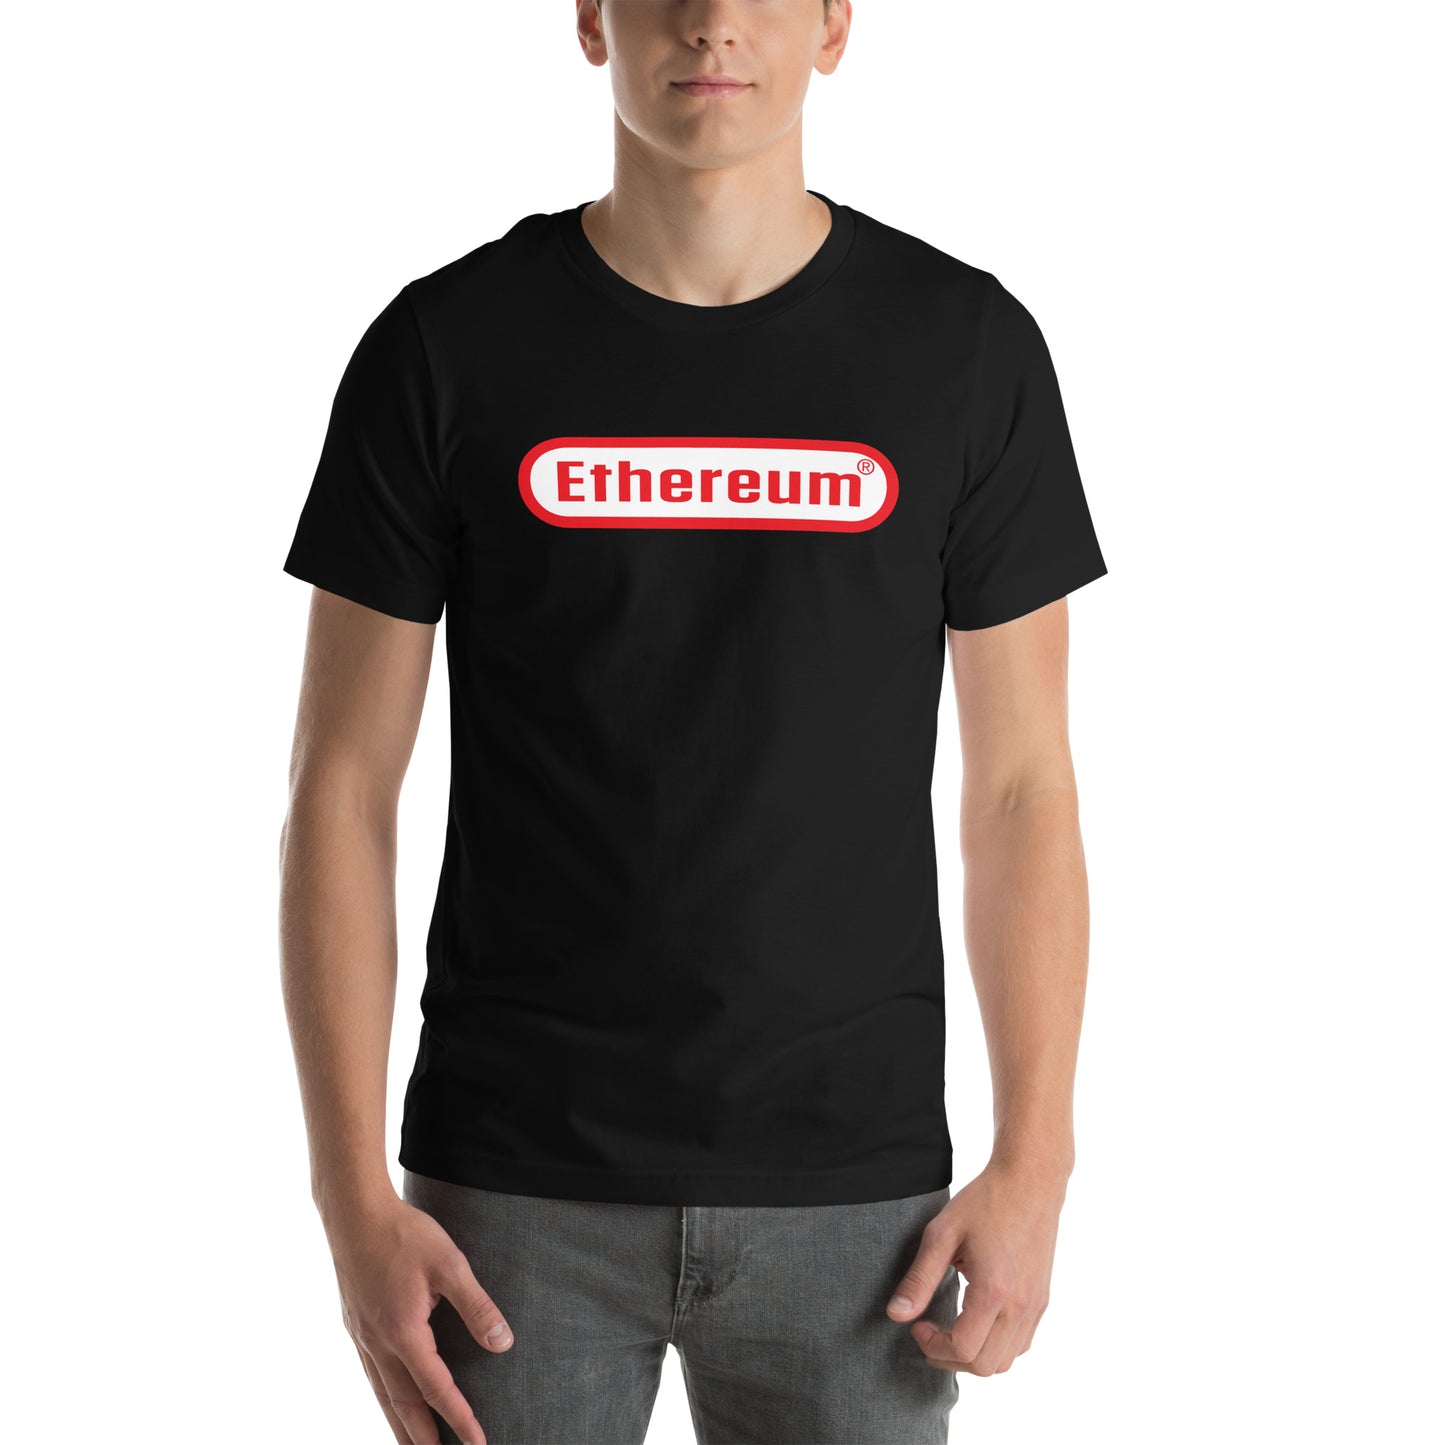 Ethereum Console T-Shirt